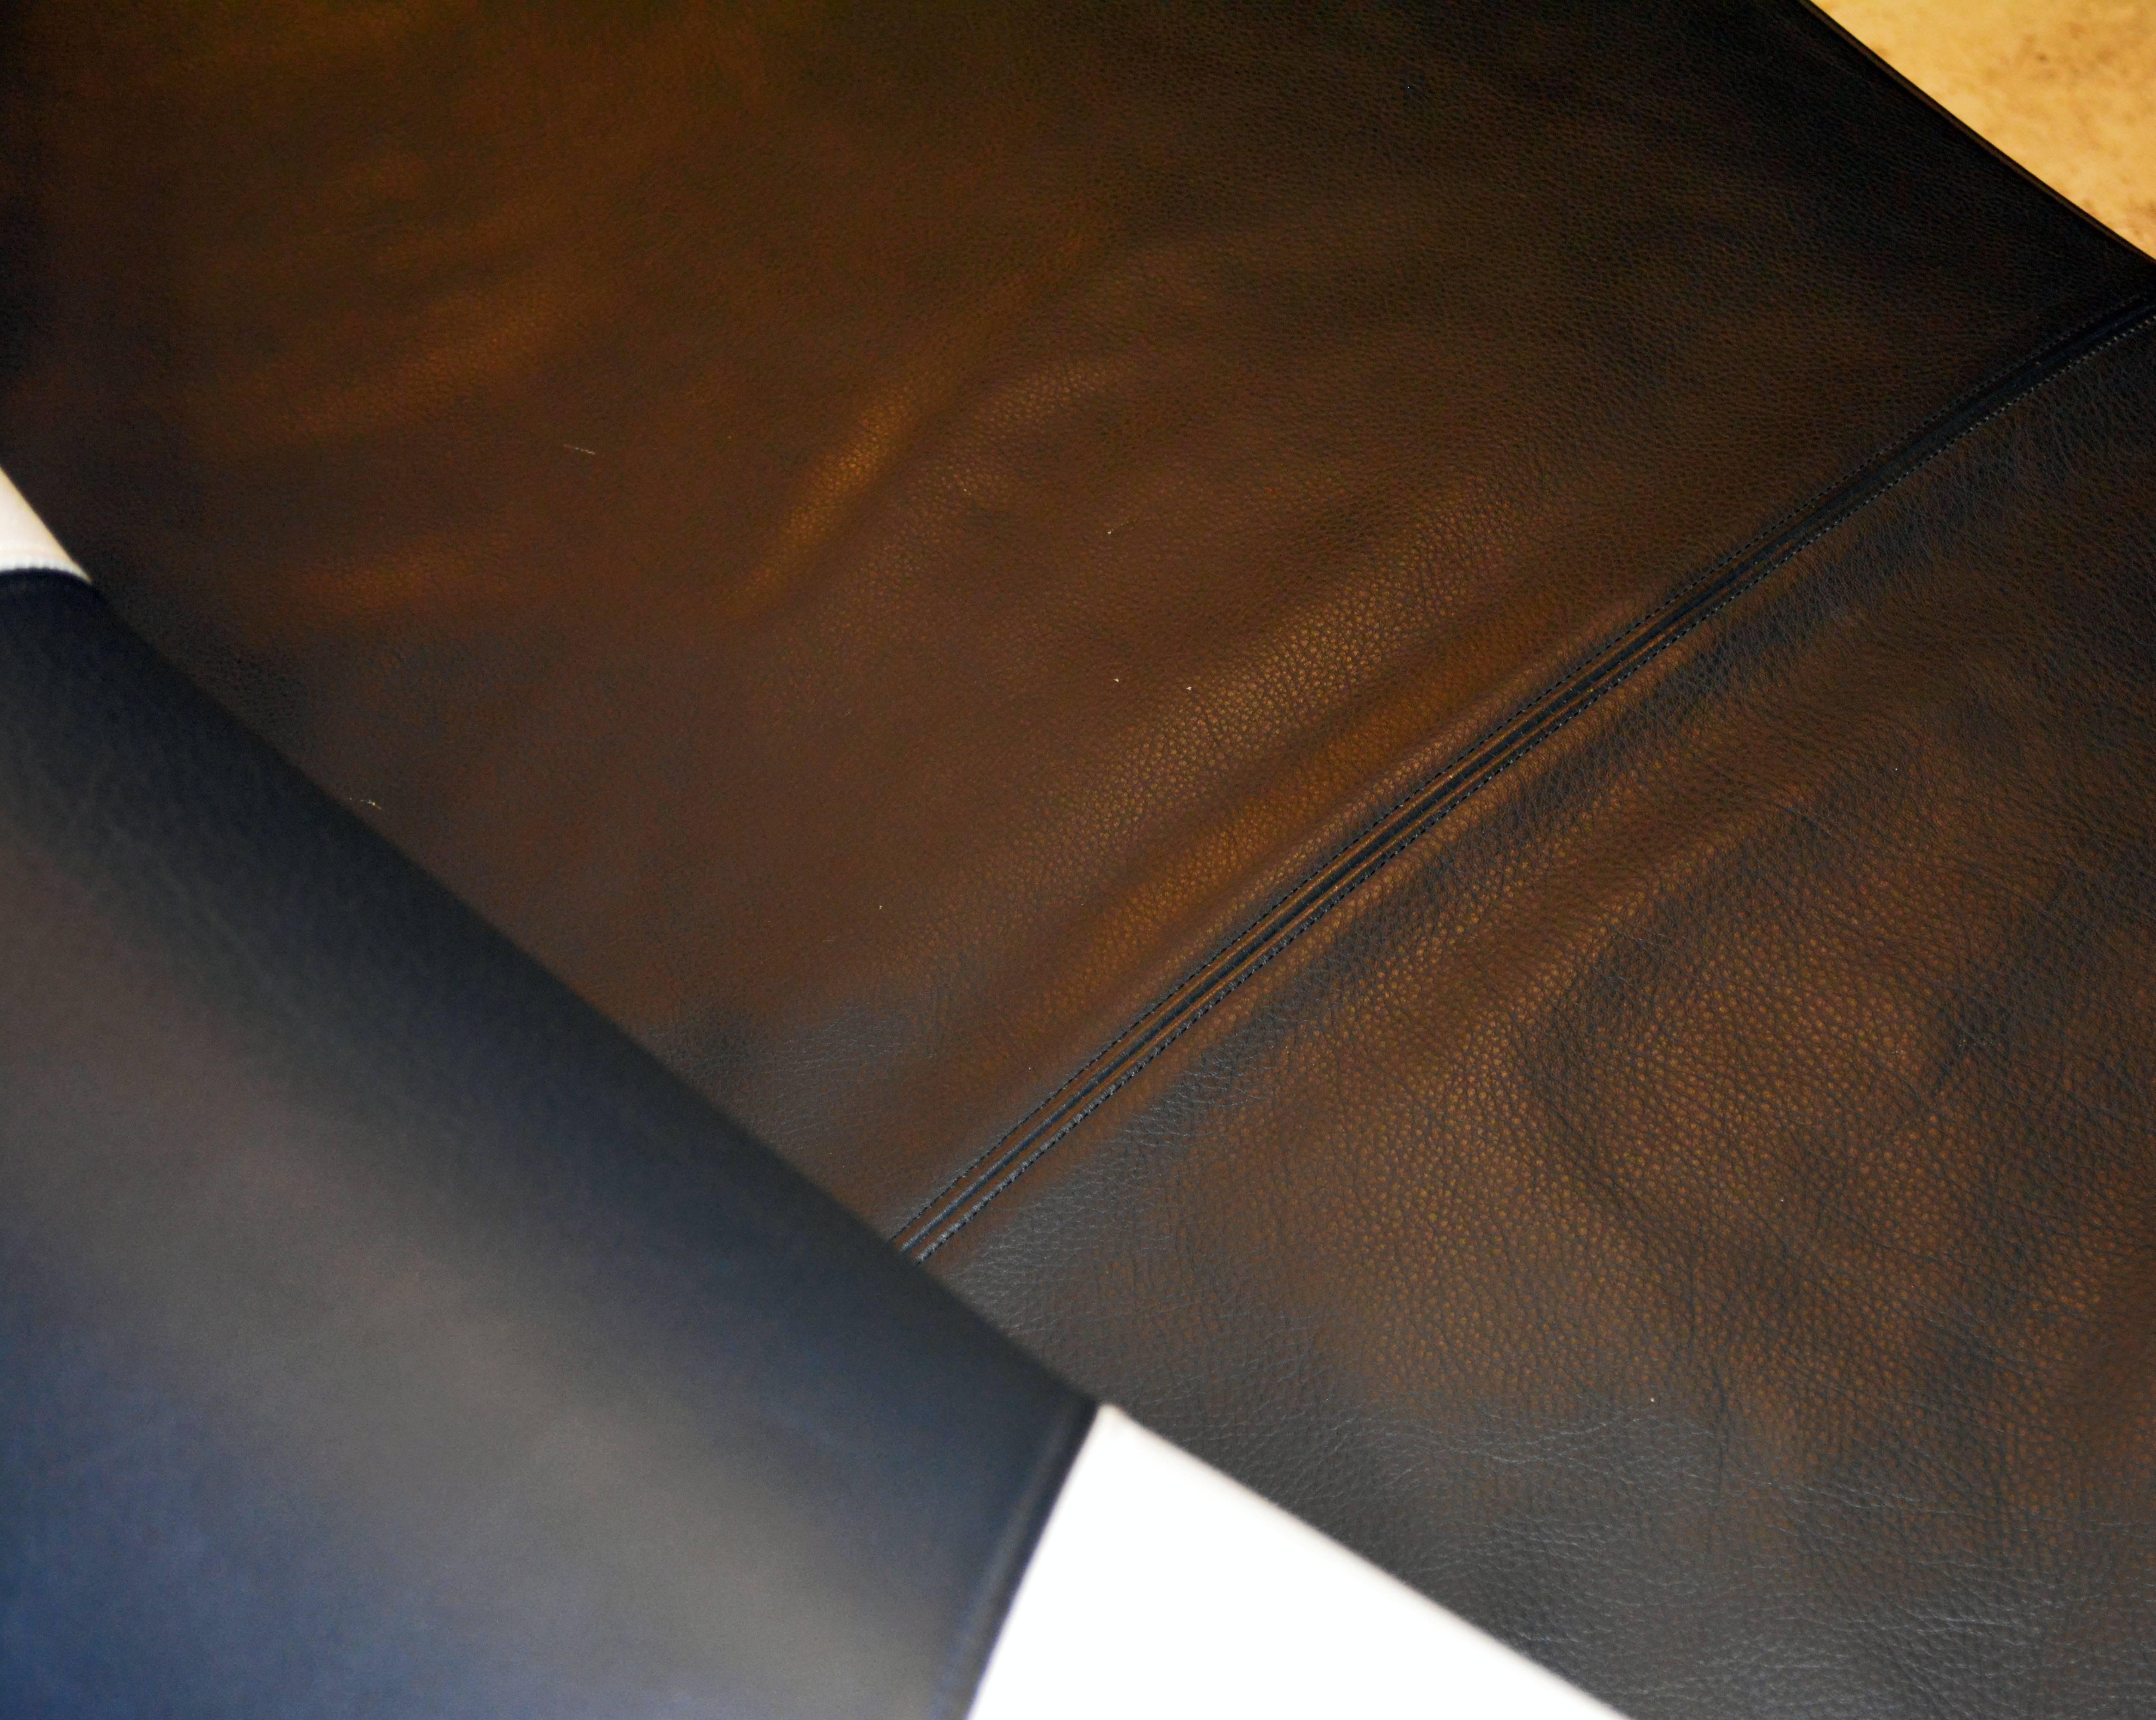 MAX Leather Sofa by Antonio Citterio for Flexform Italy 20th Century Design Icon 2